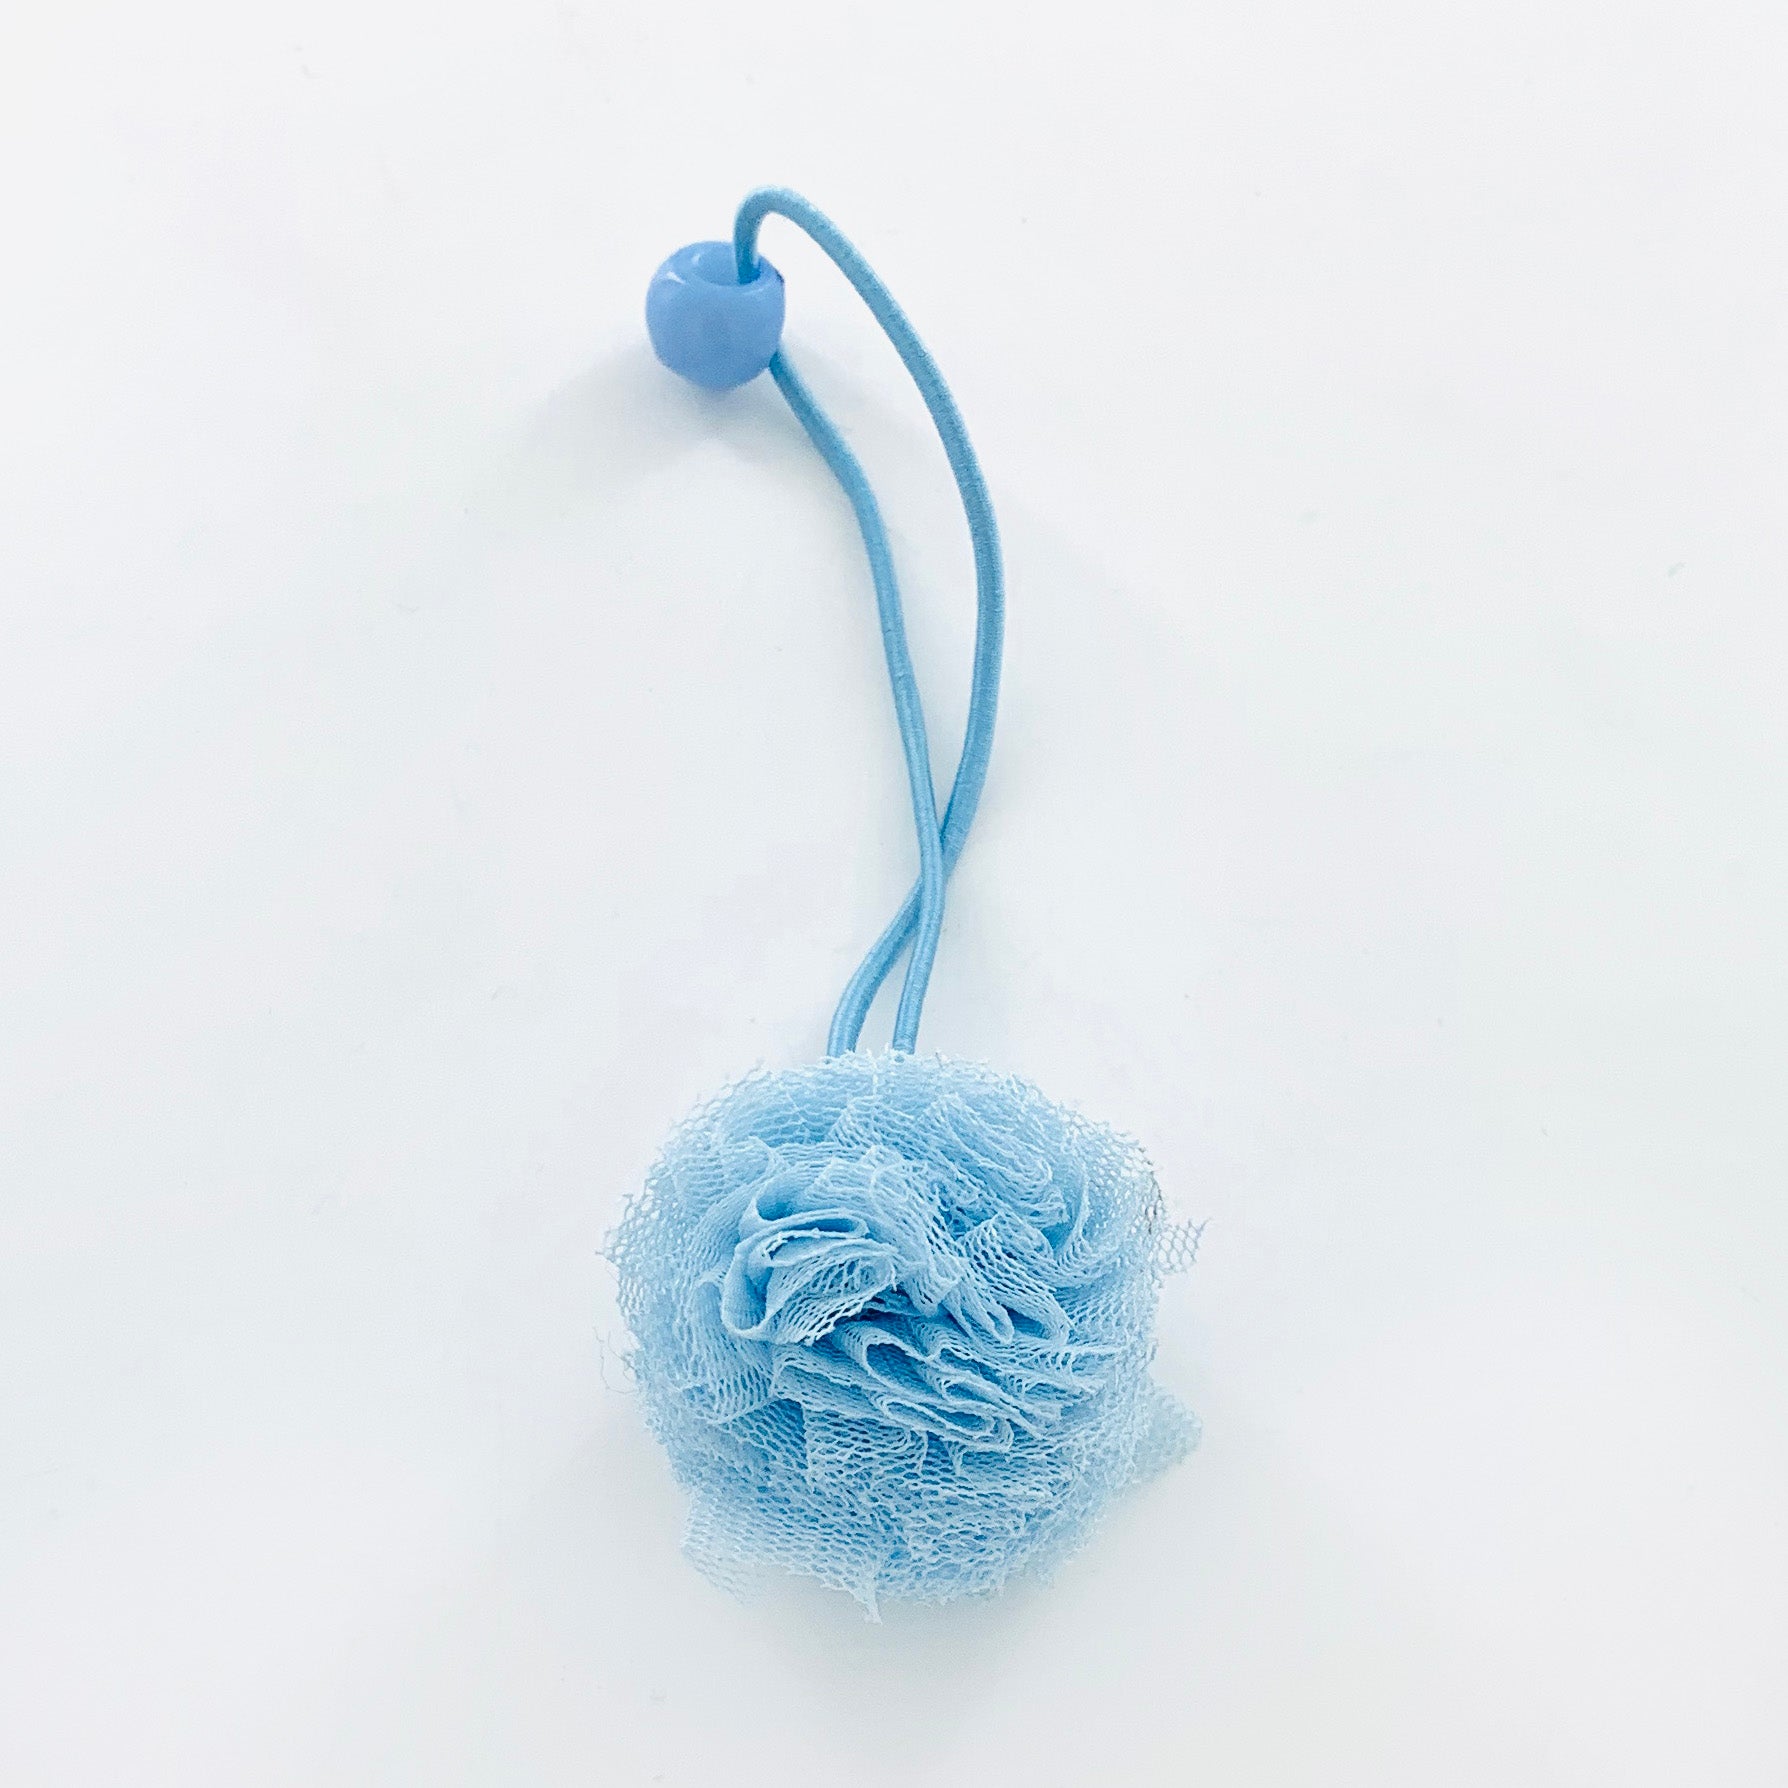 Blue rubber band with fluffy fabric pom pom